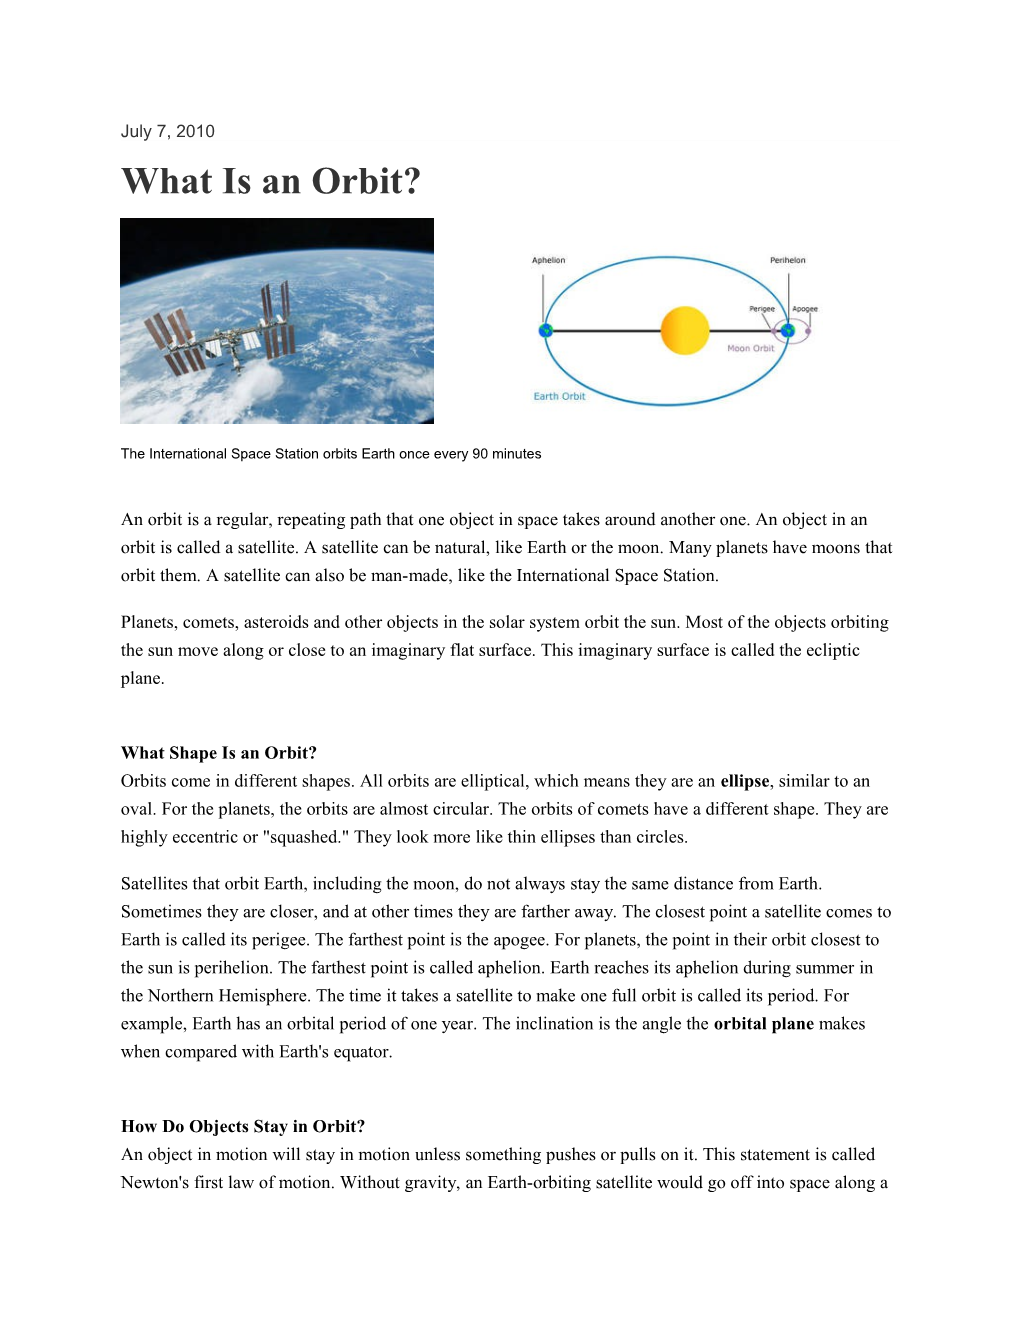 What Is an Orbit?